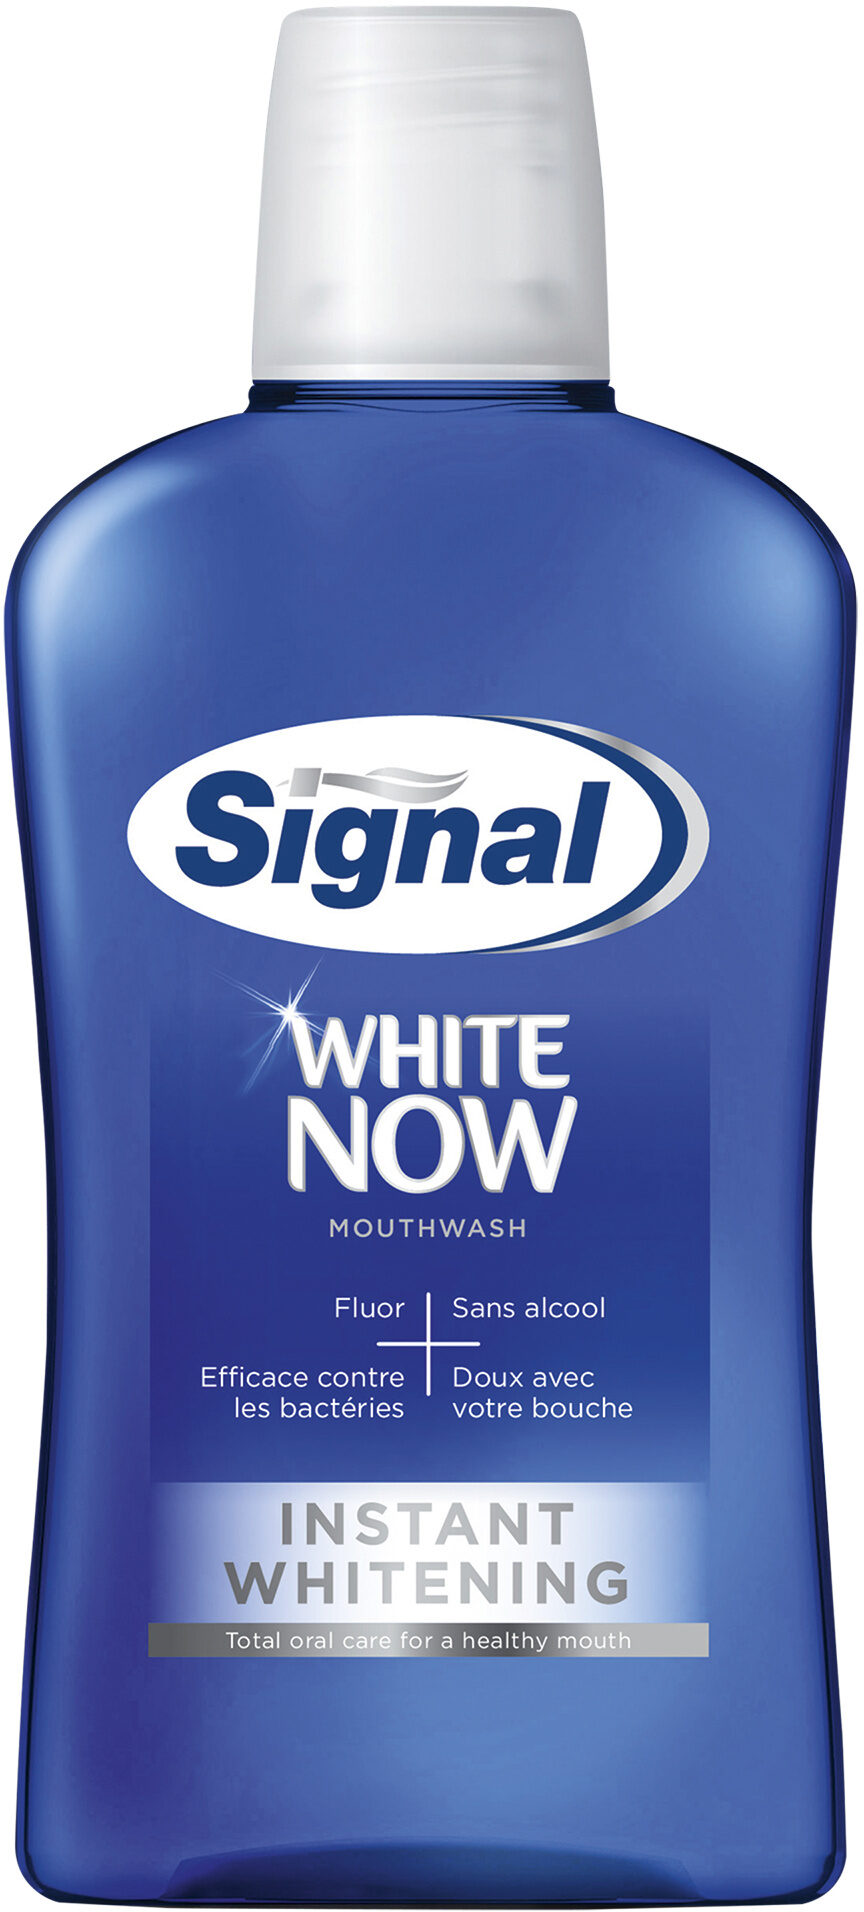 SIGNAL Bain de Bouche Antibactérien White Now 500ml - Tuote - fr